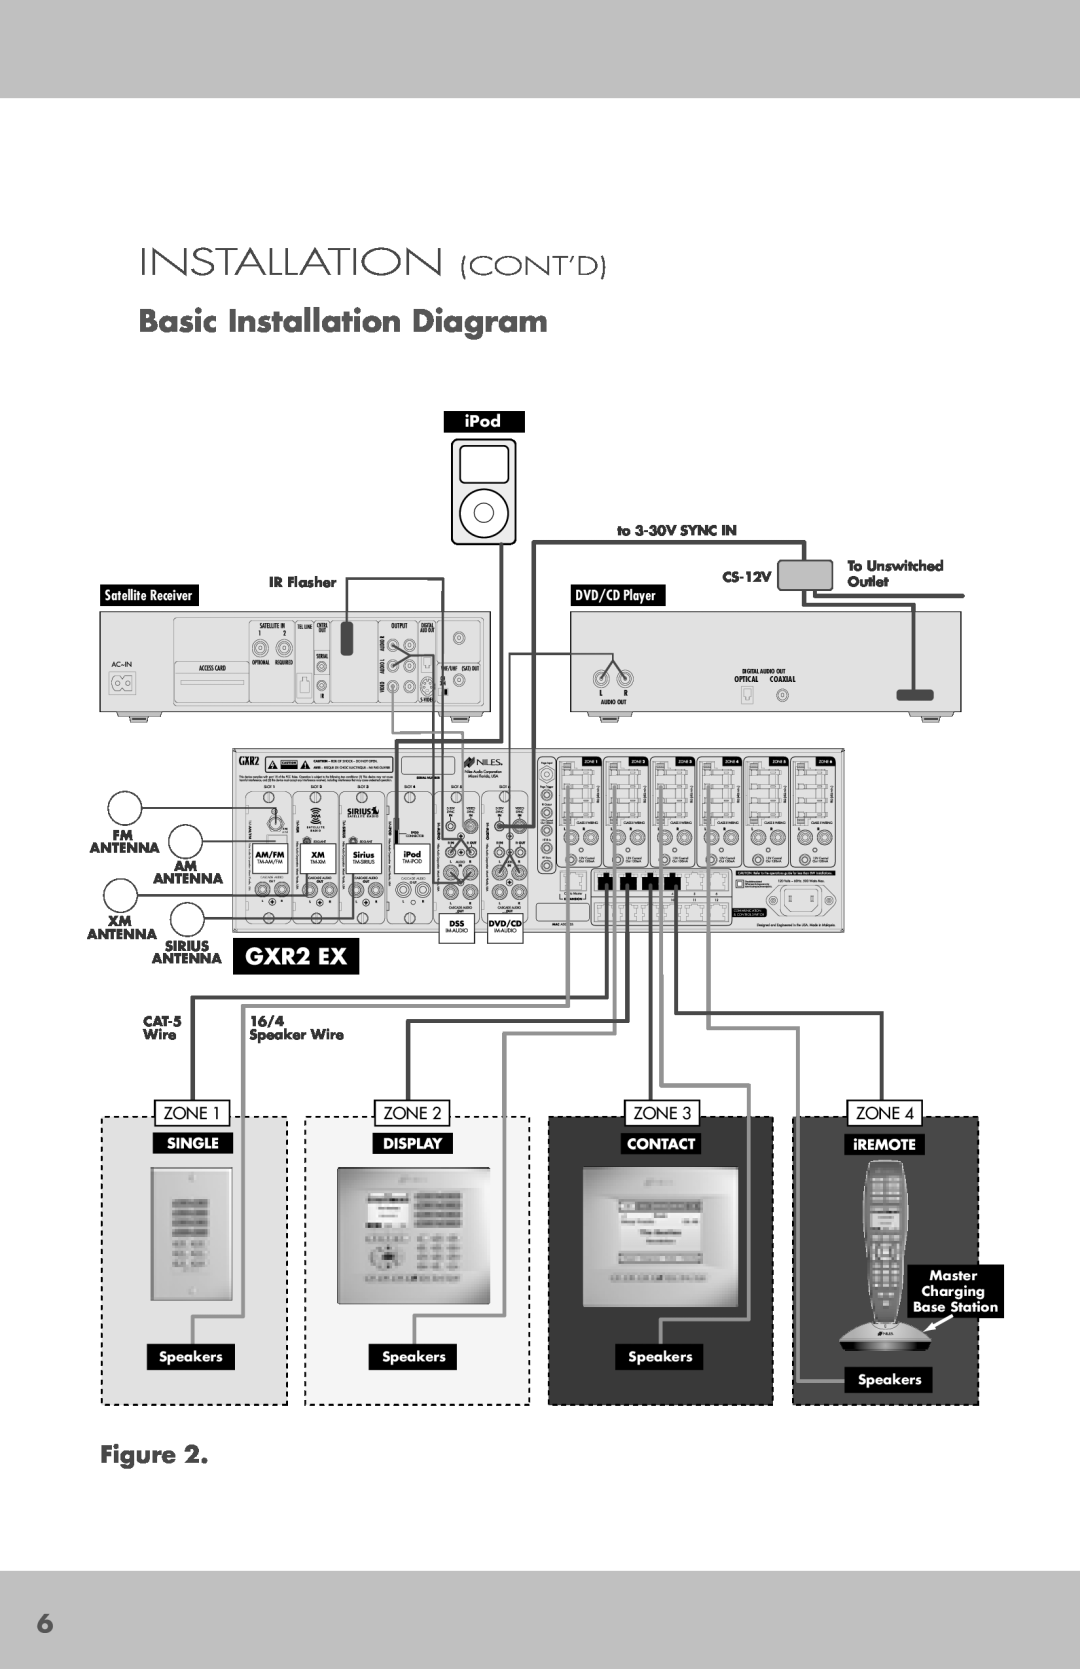 Niles Audio GXR2 EX manual Installation Cont’D, Basic Installation Diagram 